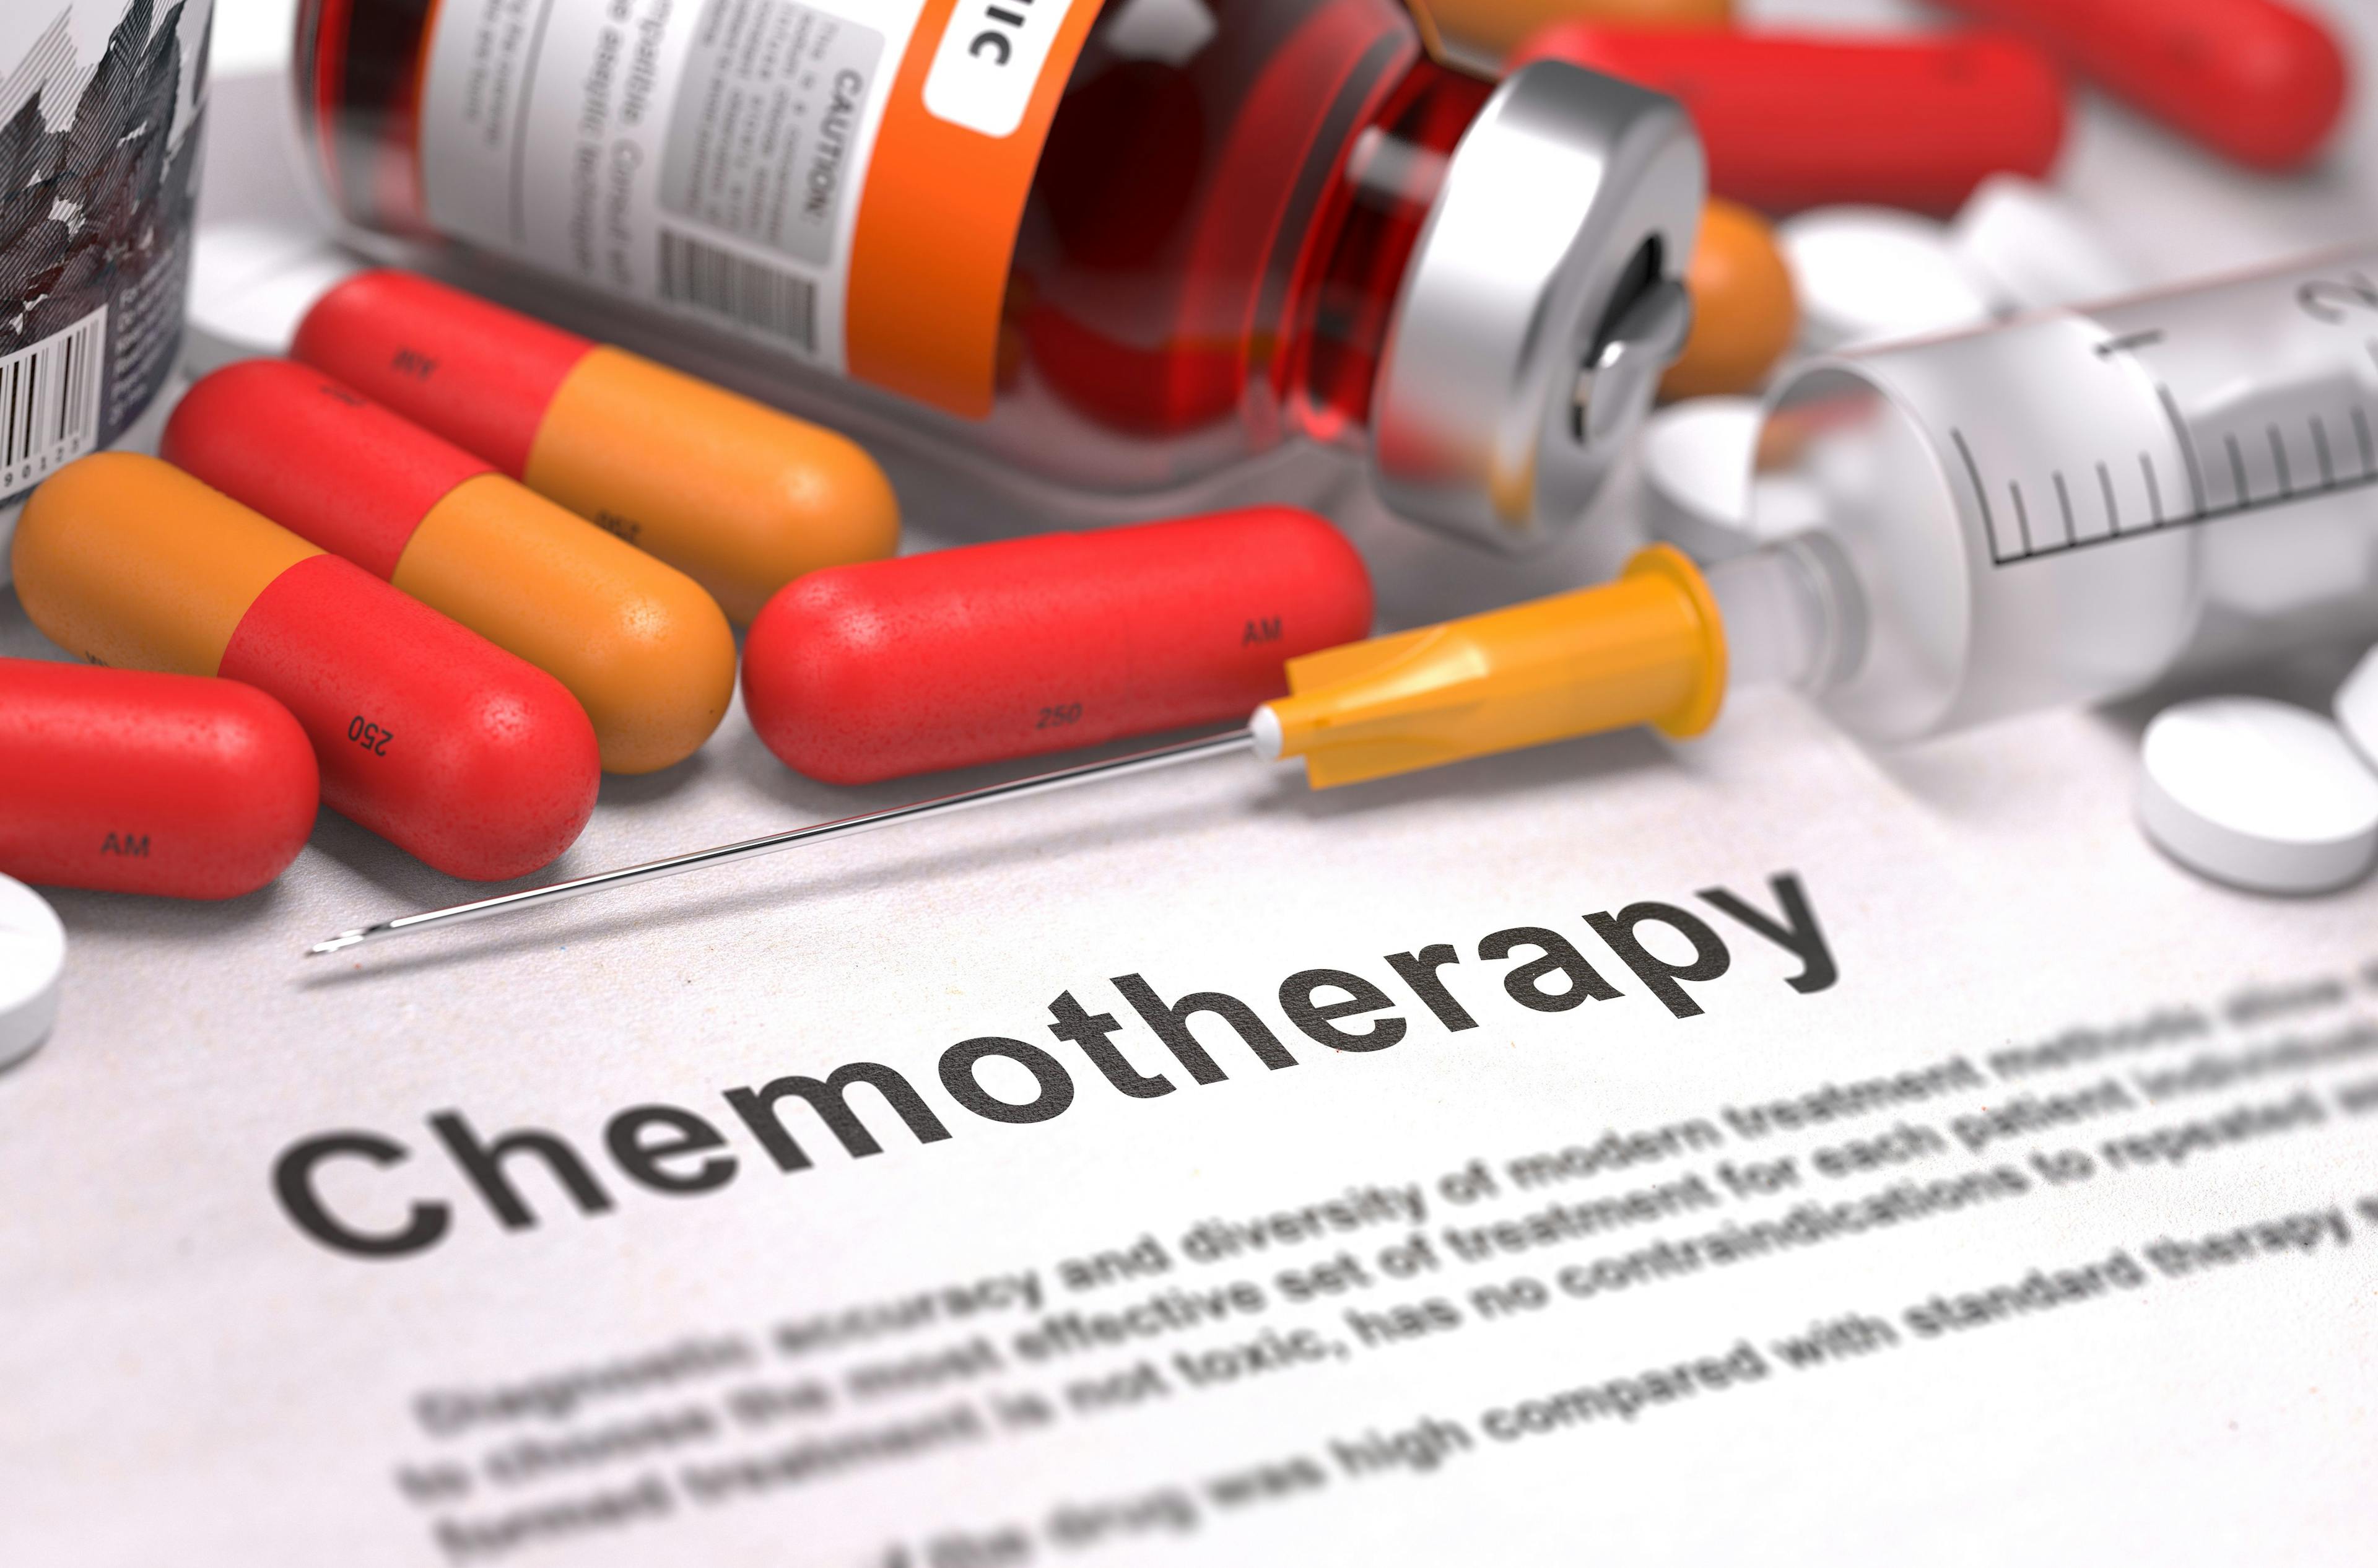 Chemotherapy | Image Credit: tashatuvango - stock.adobe.com